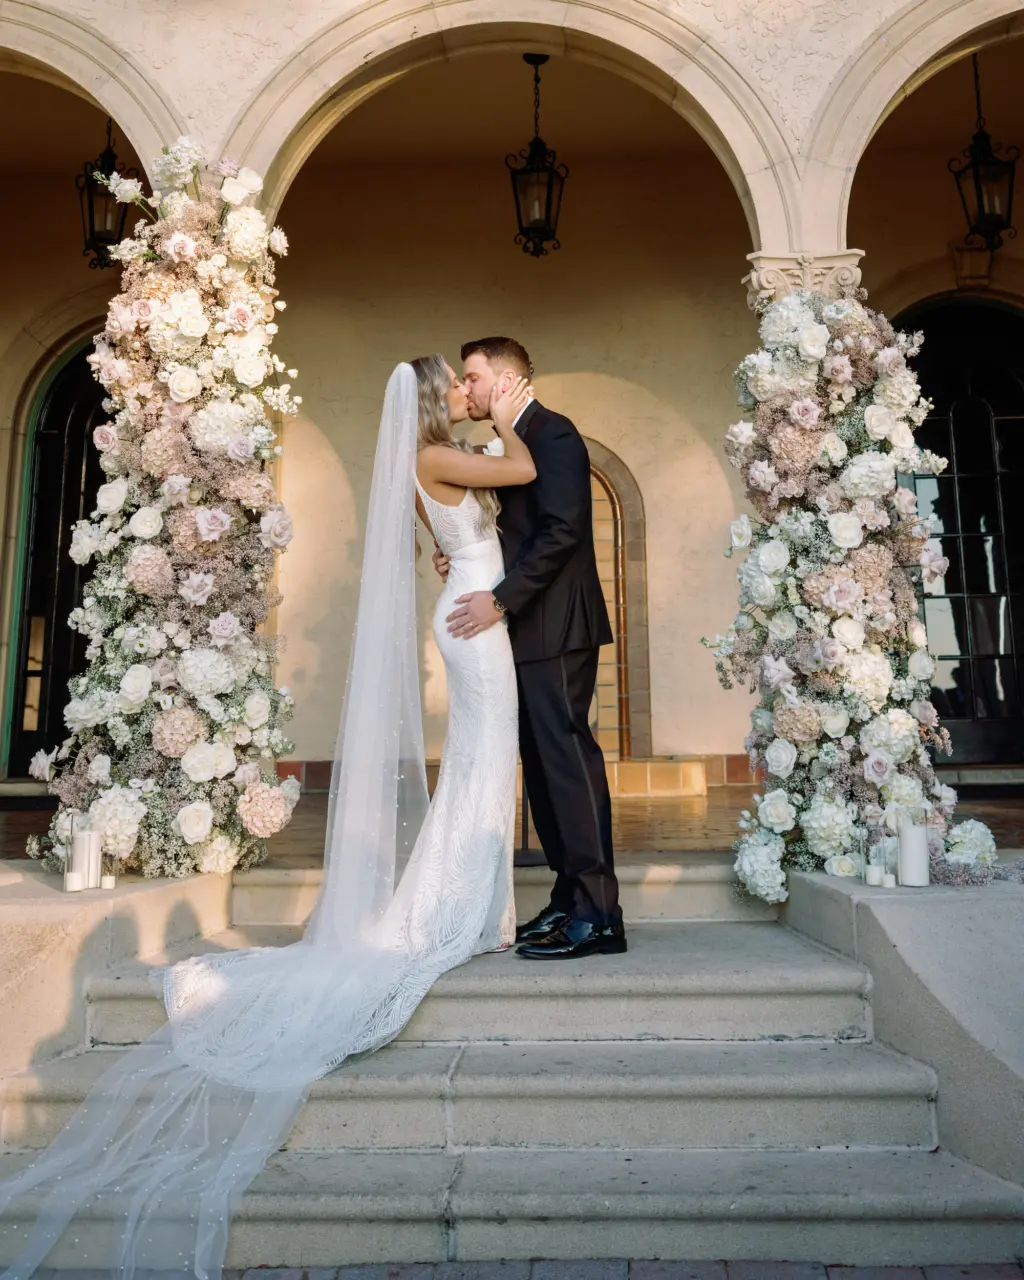 Bride and Groom First Kiss Sunset Wedding Portrait | Sarasota Photographer Dewitt For Love